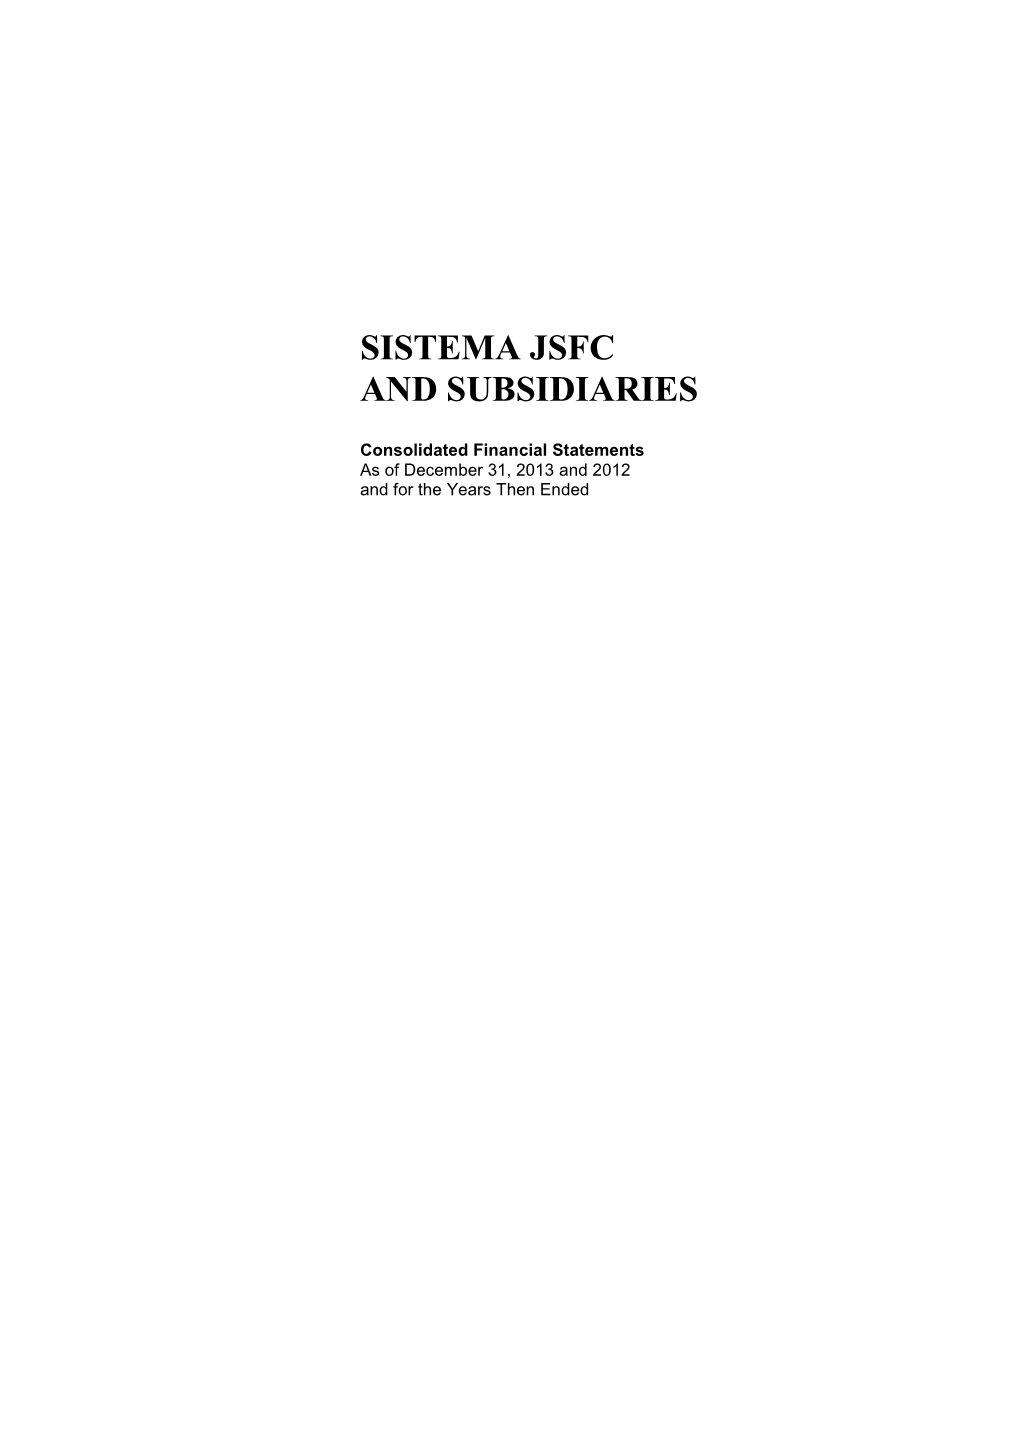 Sistema Jsfc and Subsidiaries